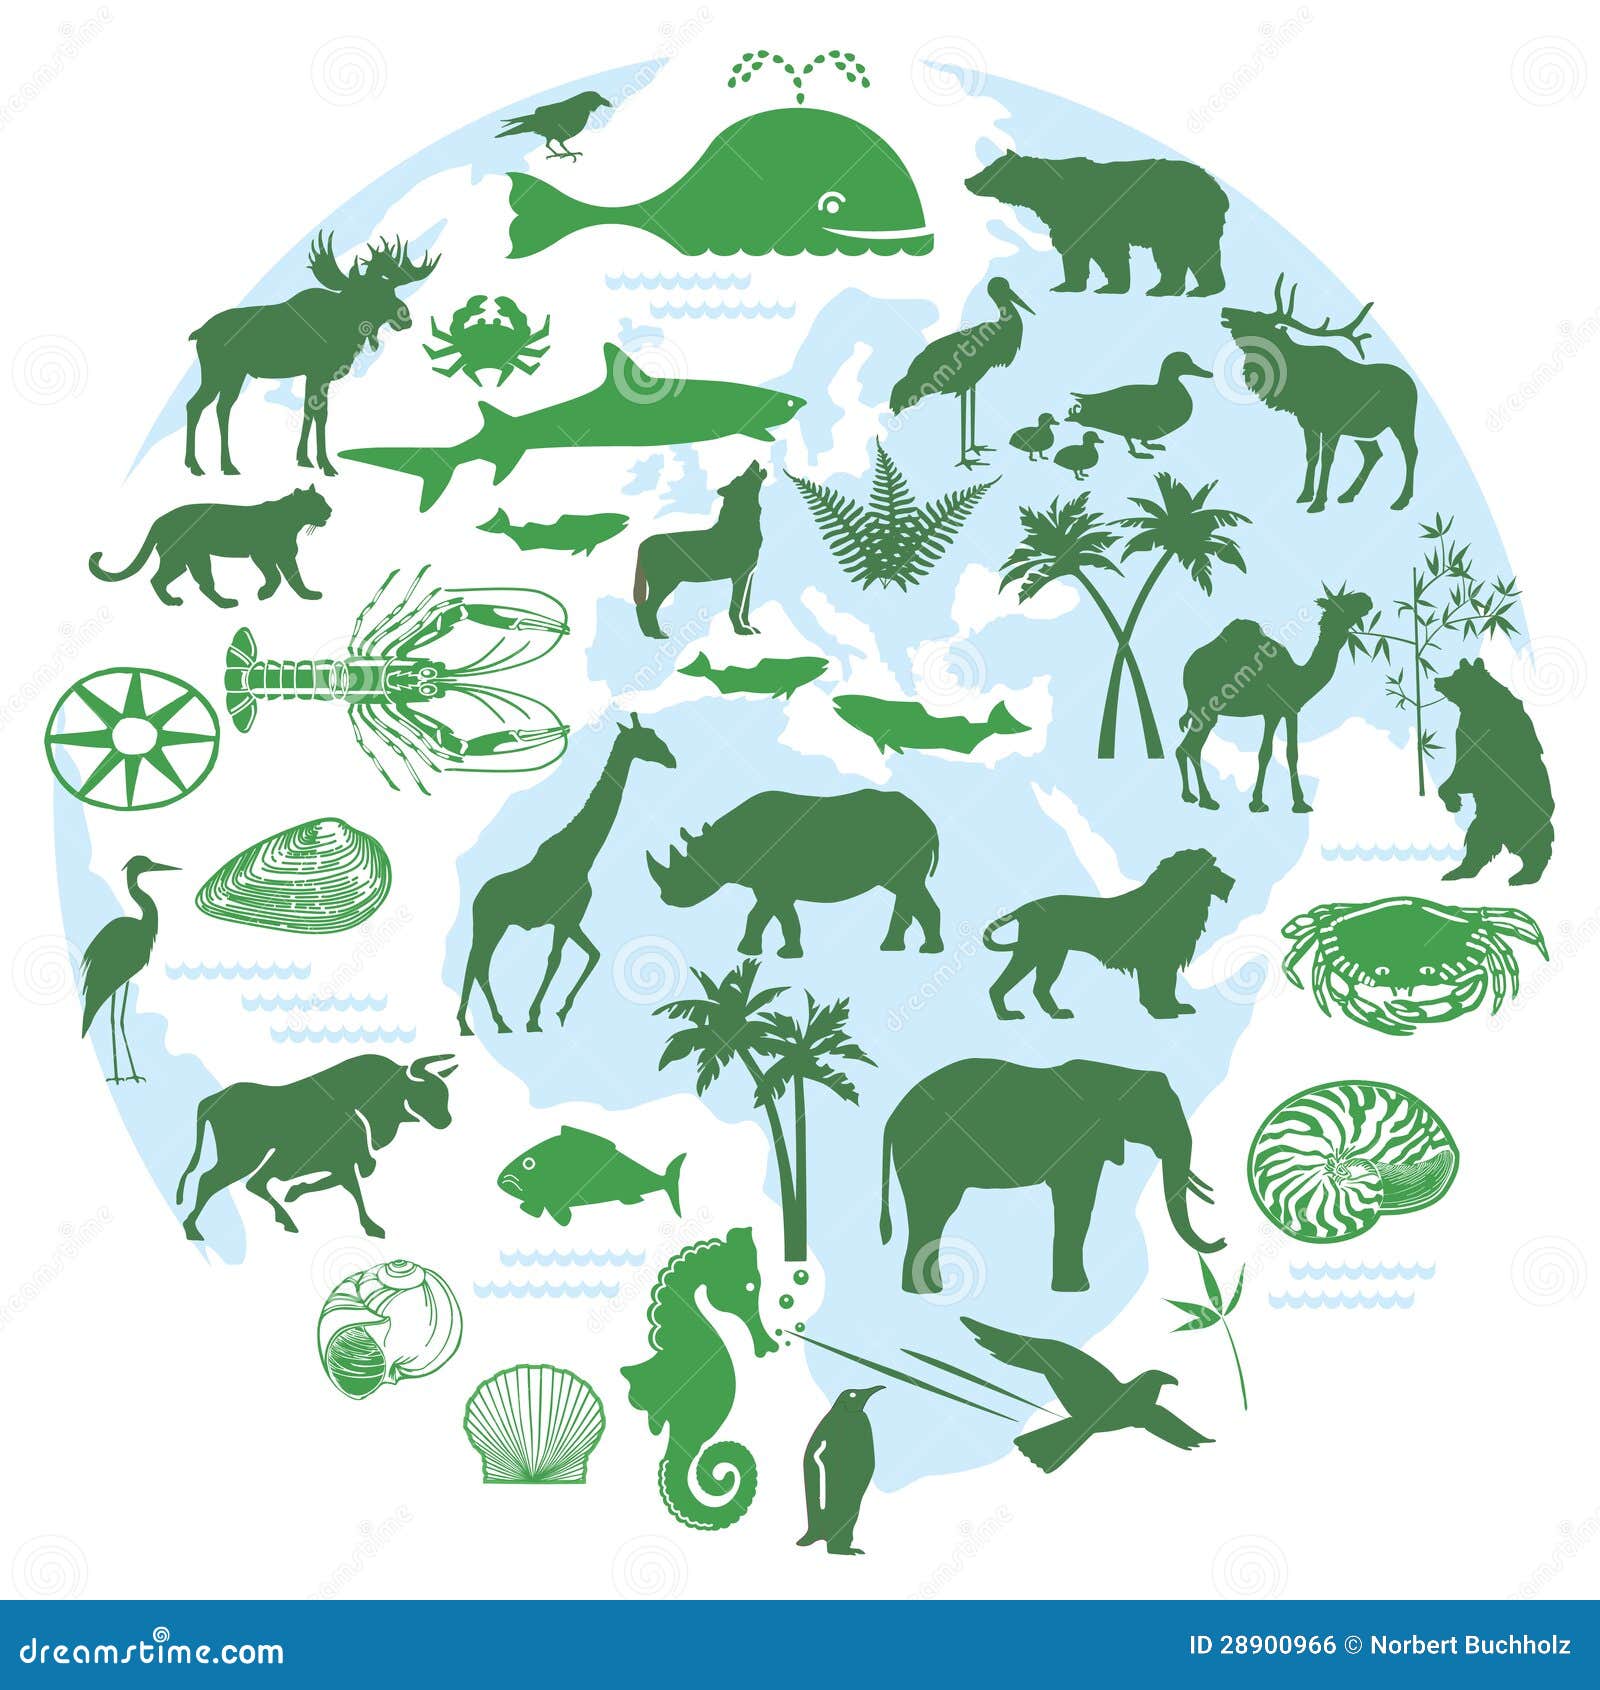 animals and biodiversity